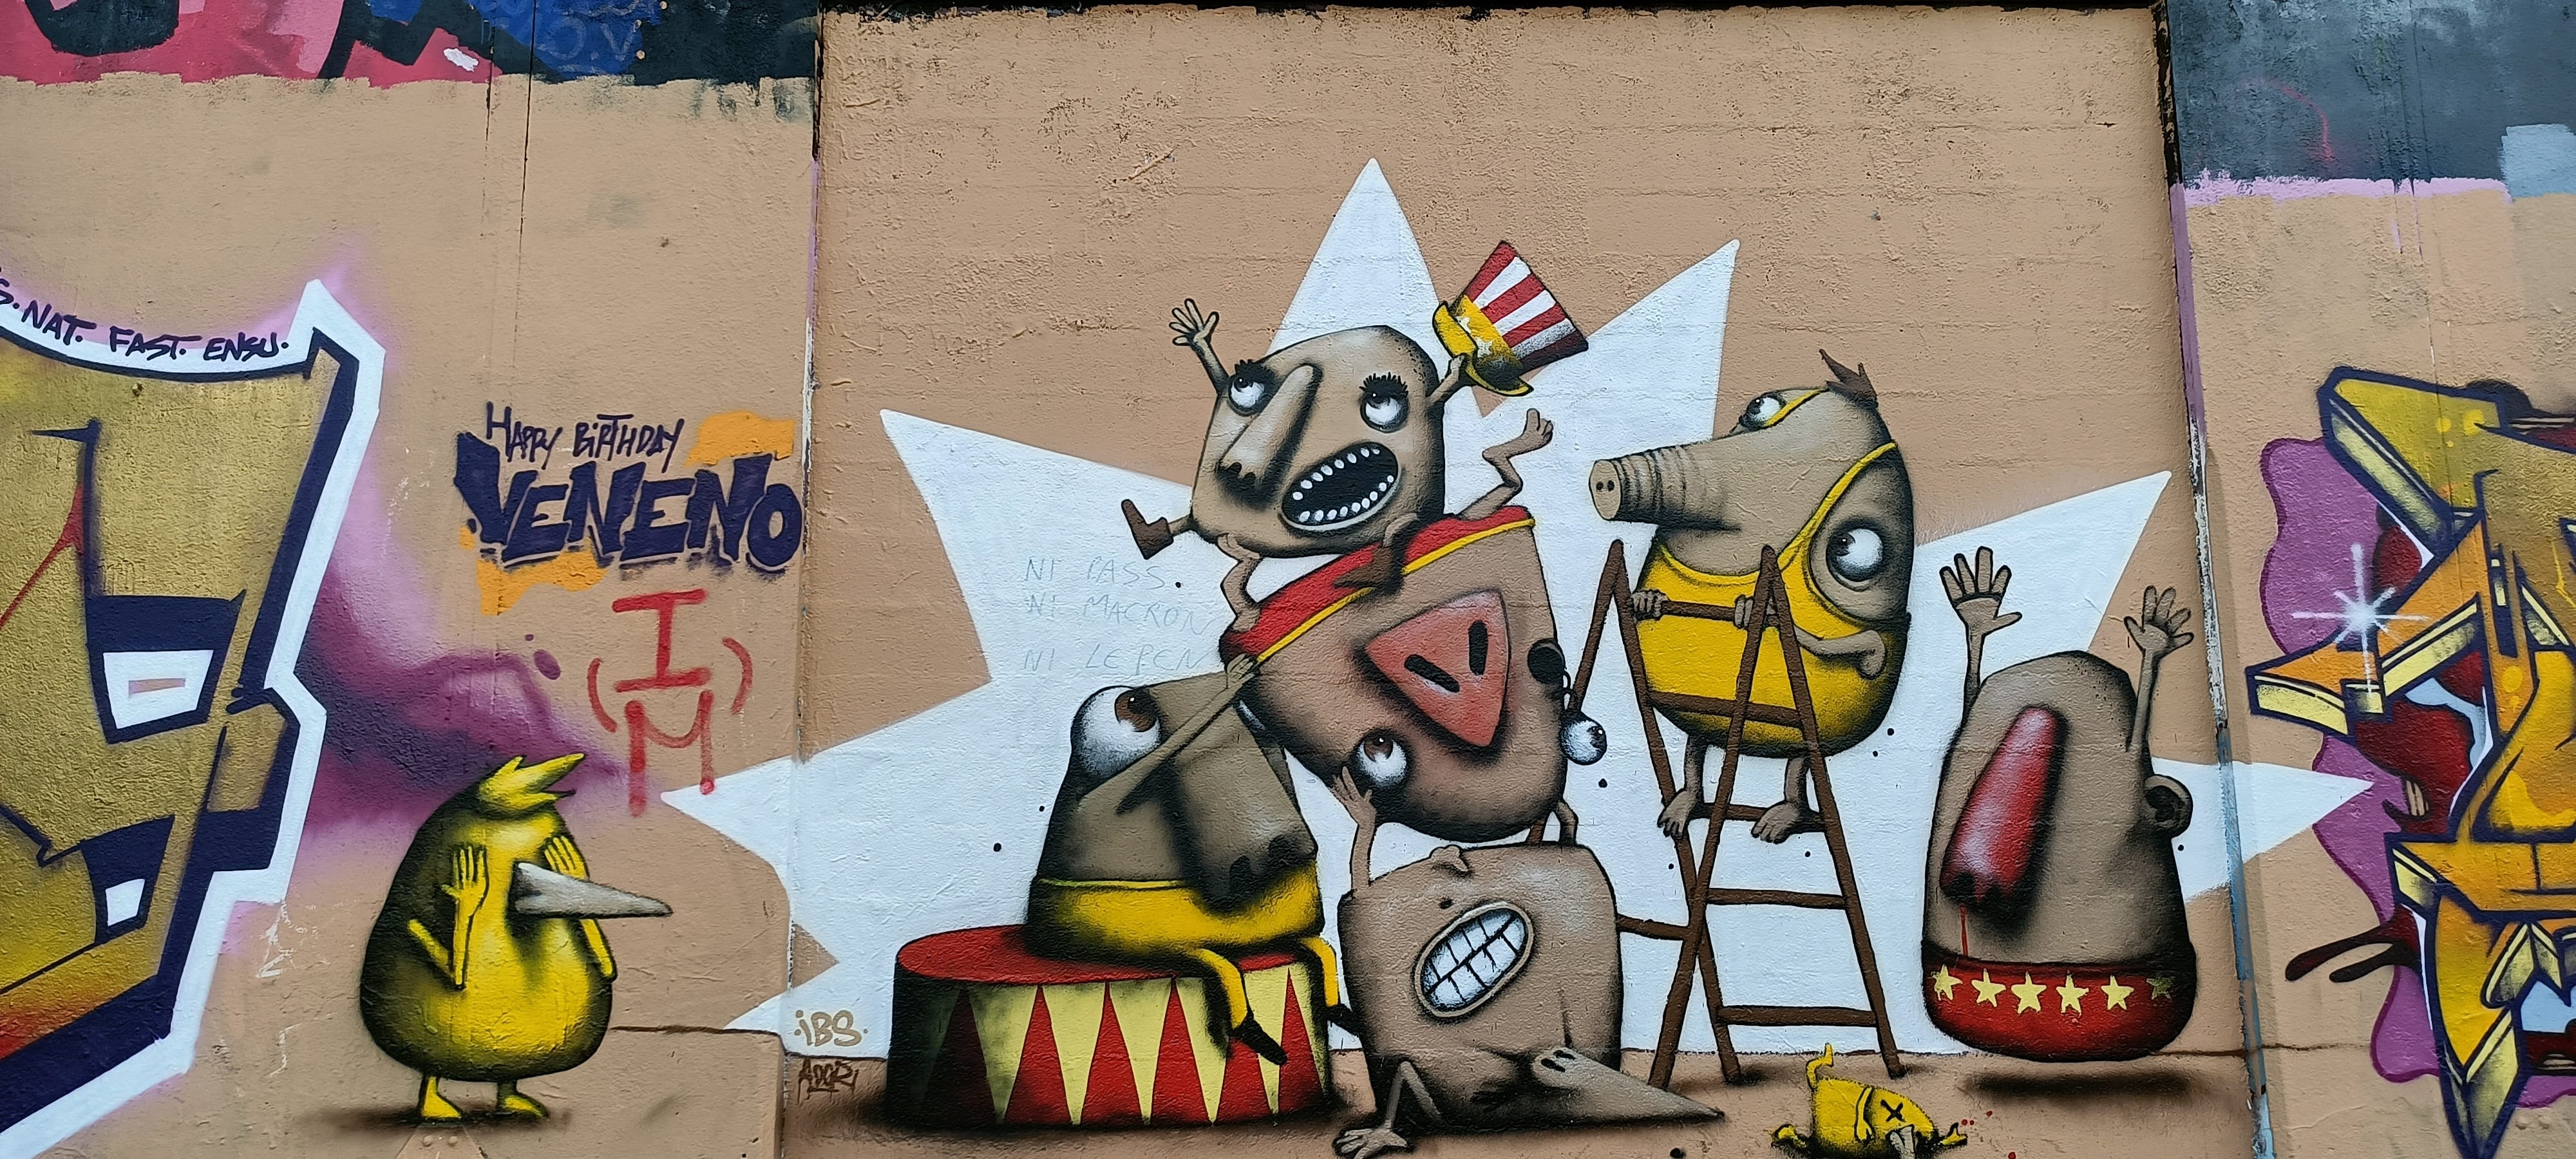 Graffiti 5459 Circus de Ador capturé par Rabot à Nantes France